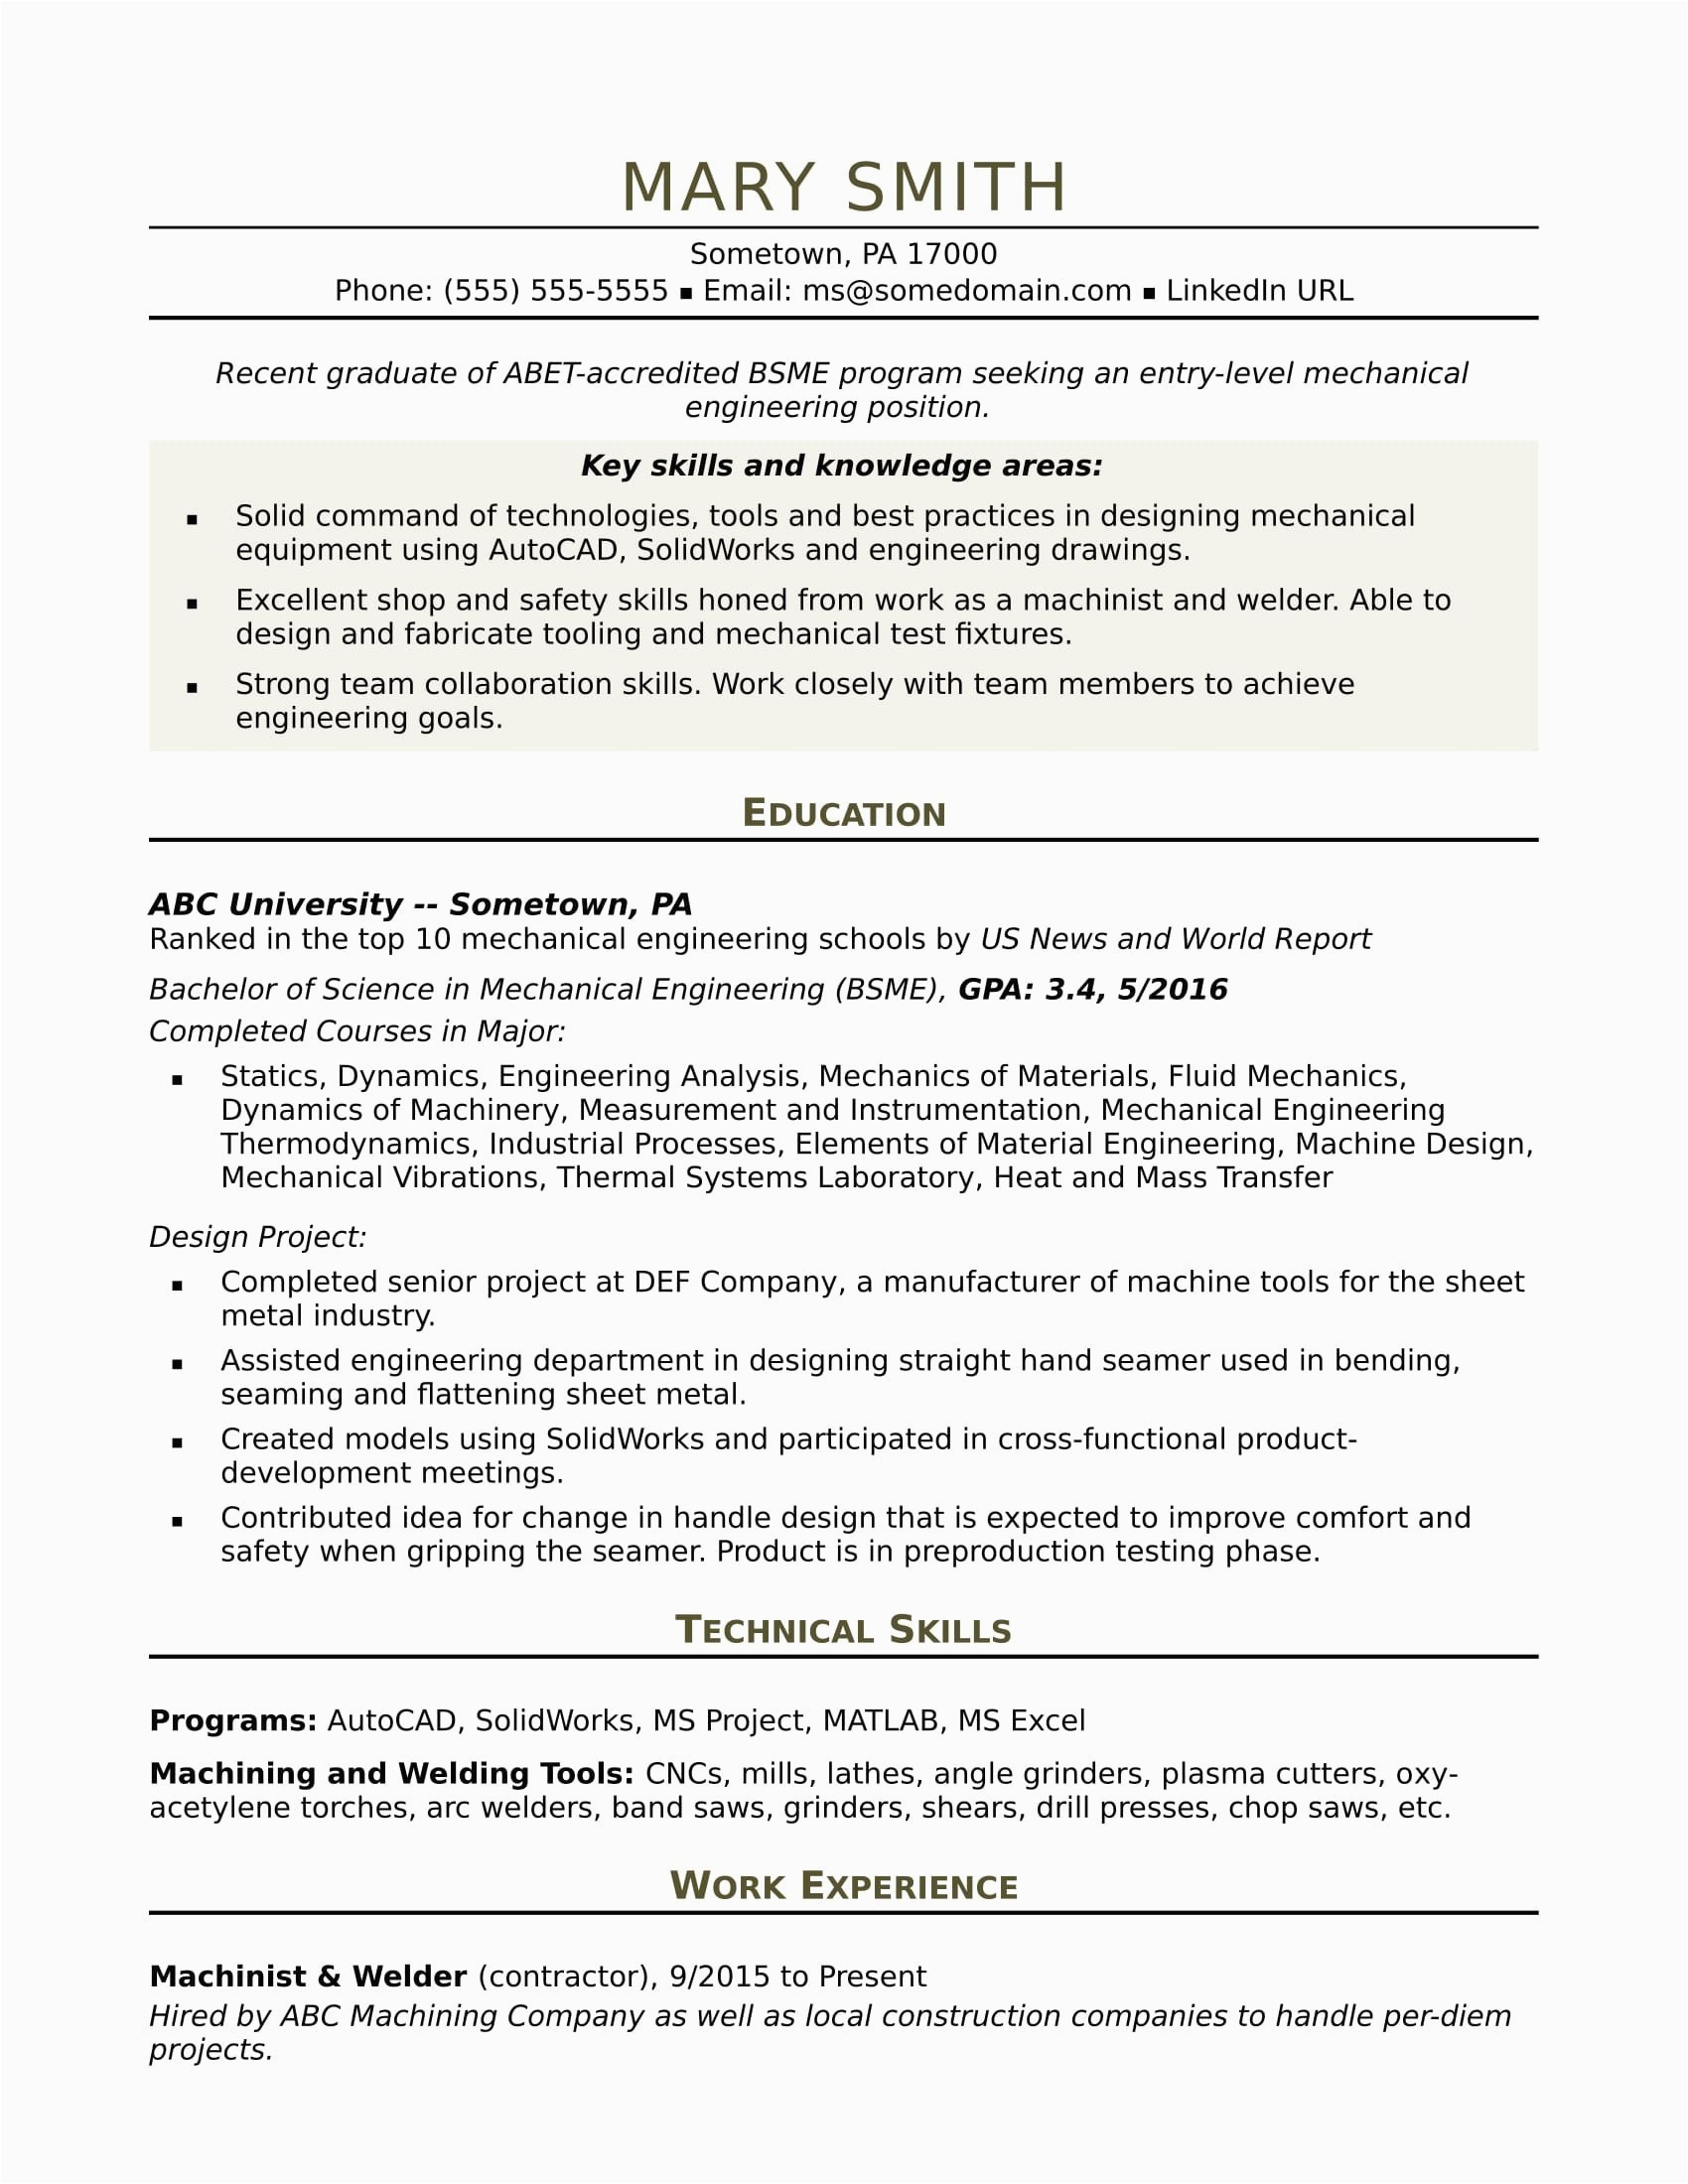 Sample Of Resume for Mechanical Engineering Undergraduate Mechanical Engineer Resume Entry Level